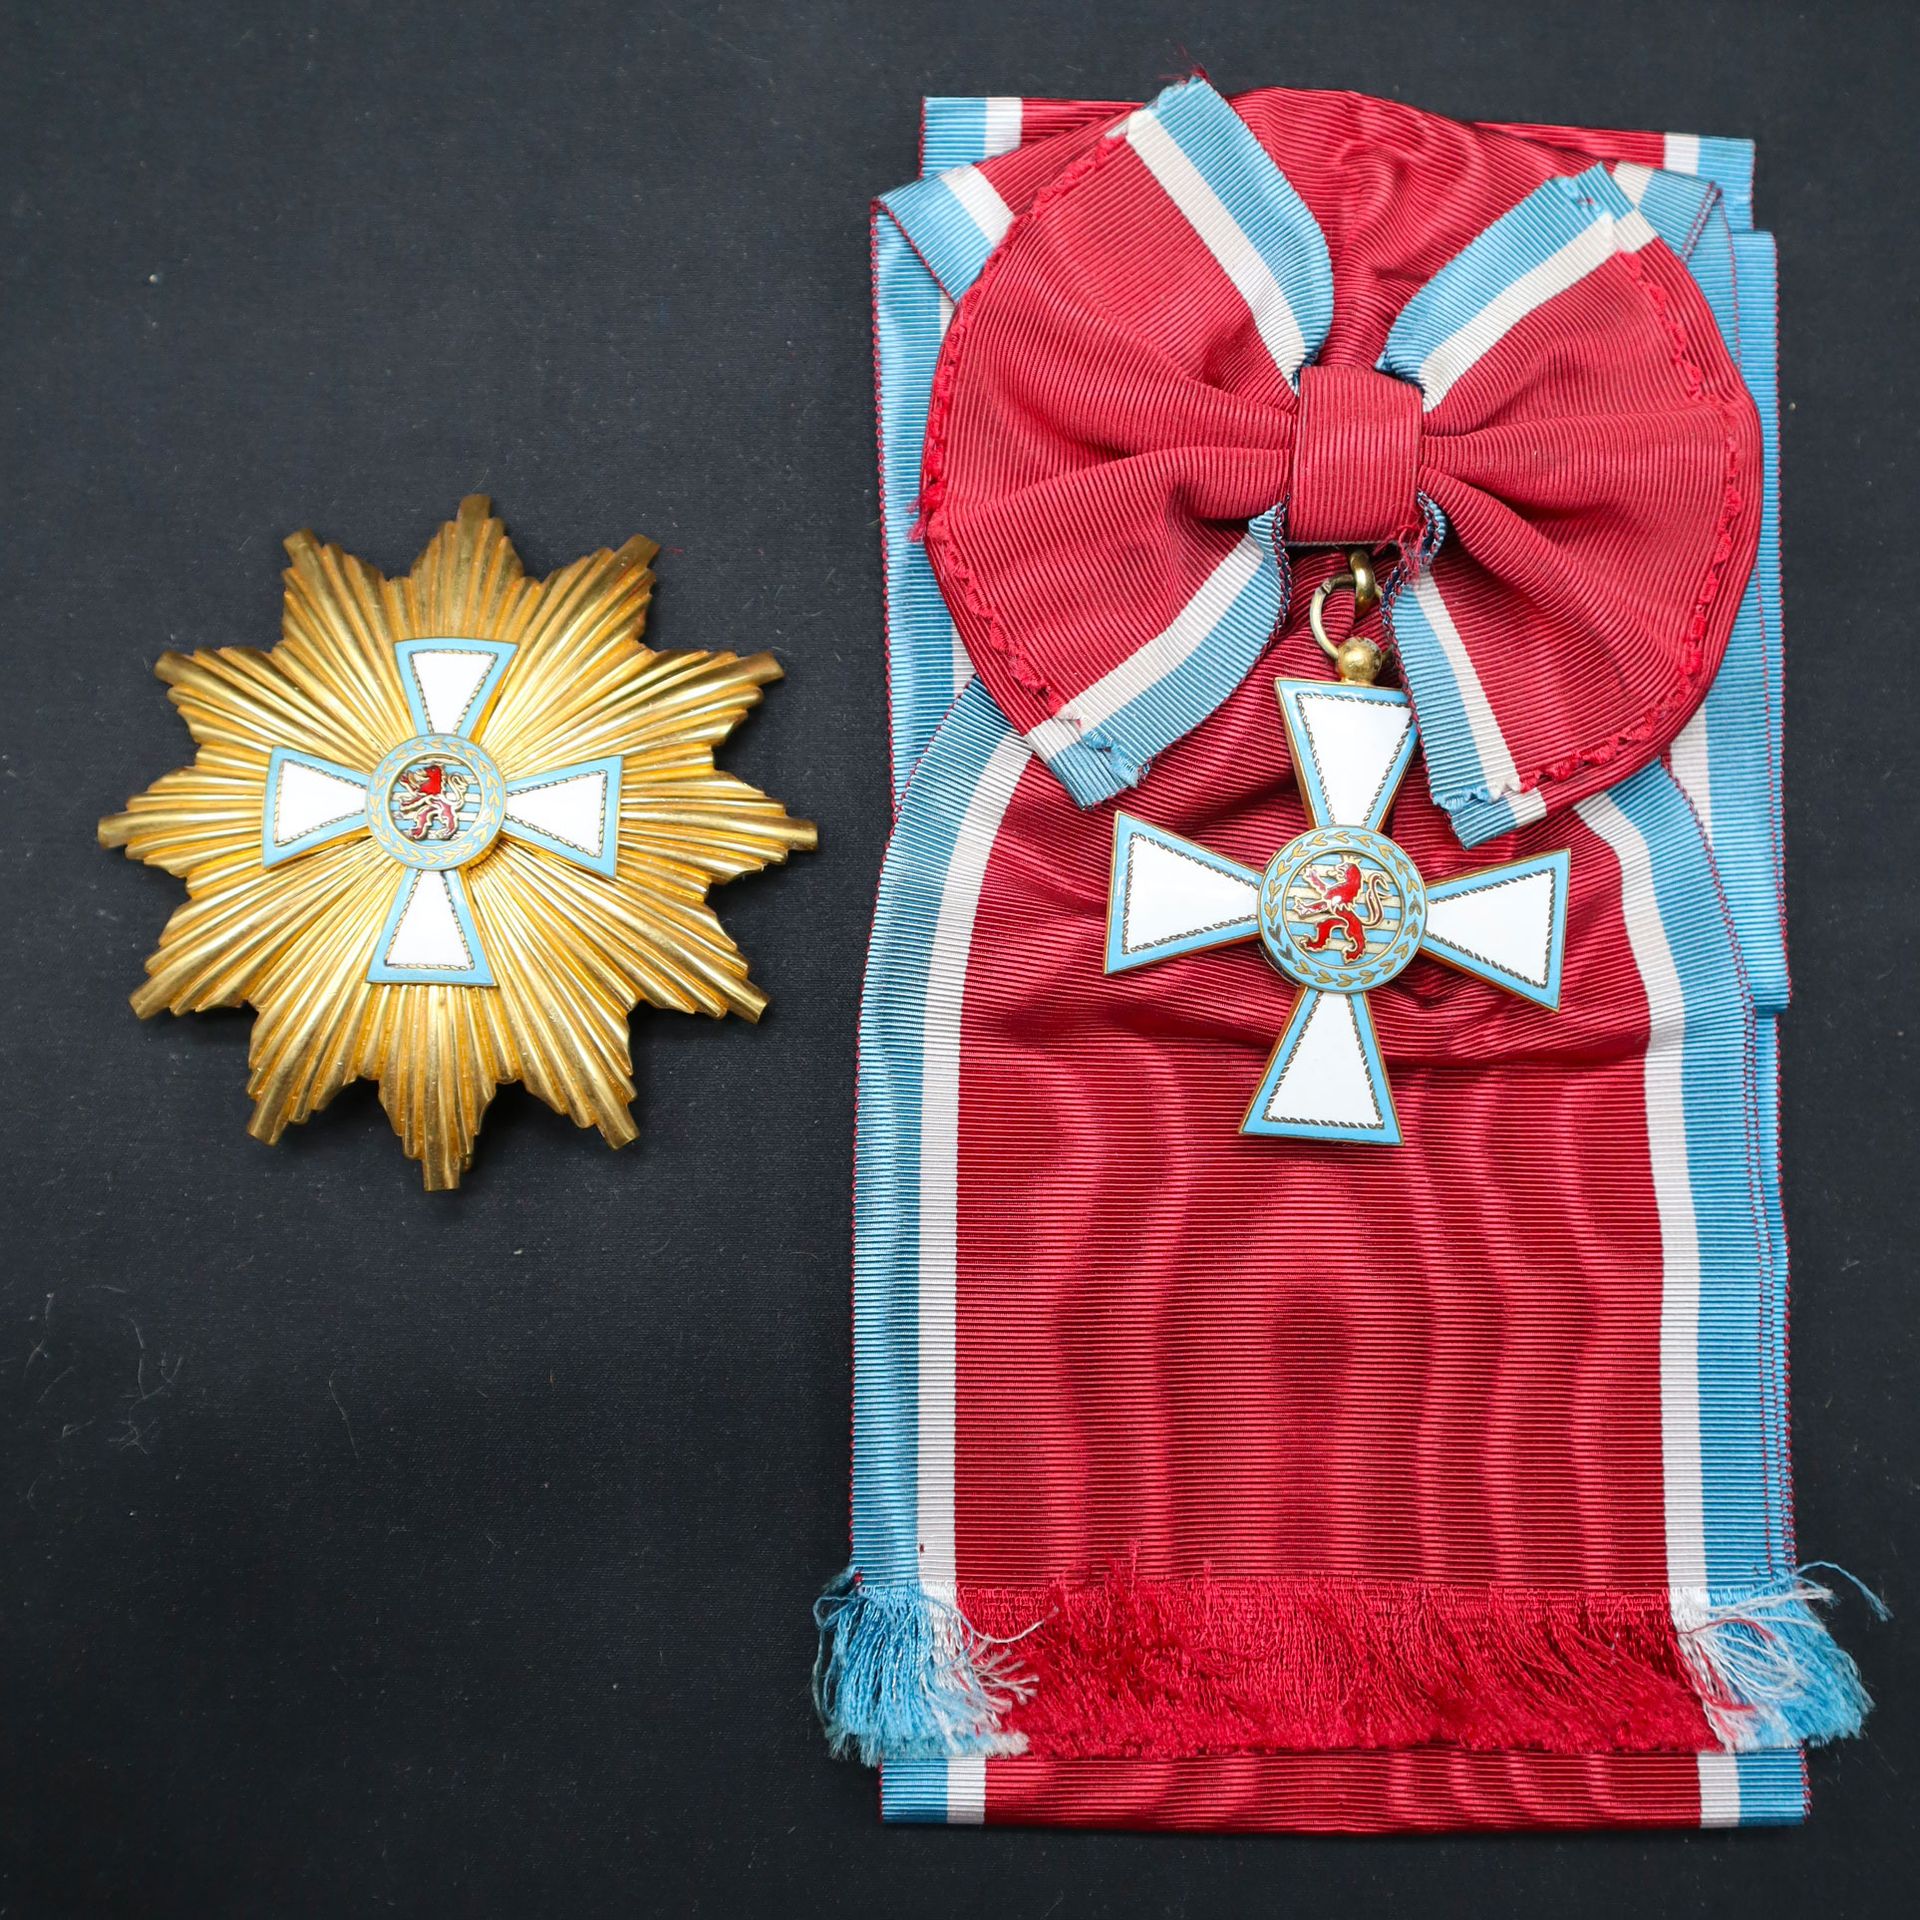 Null 卢森堡--功绩勋章，一套大十字勋章包括镀金青铜和珐琅的珠宝和牌匾，中心分为三部分，由一个倾斜的针和两个侧钩固定，完整的腰带。
珠宝：57.5 x 52&hellip;